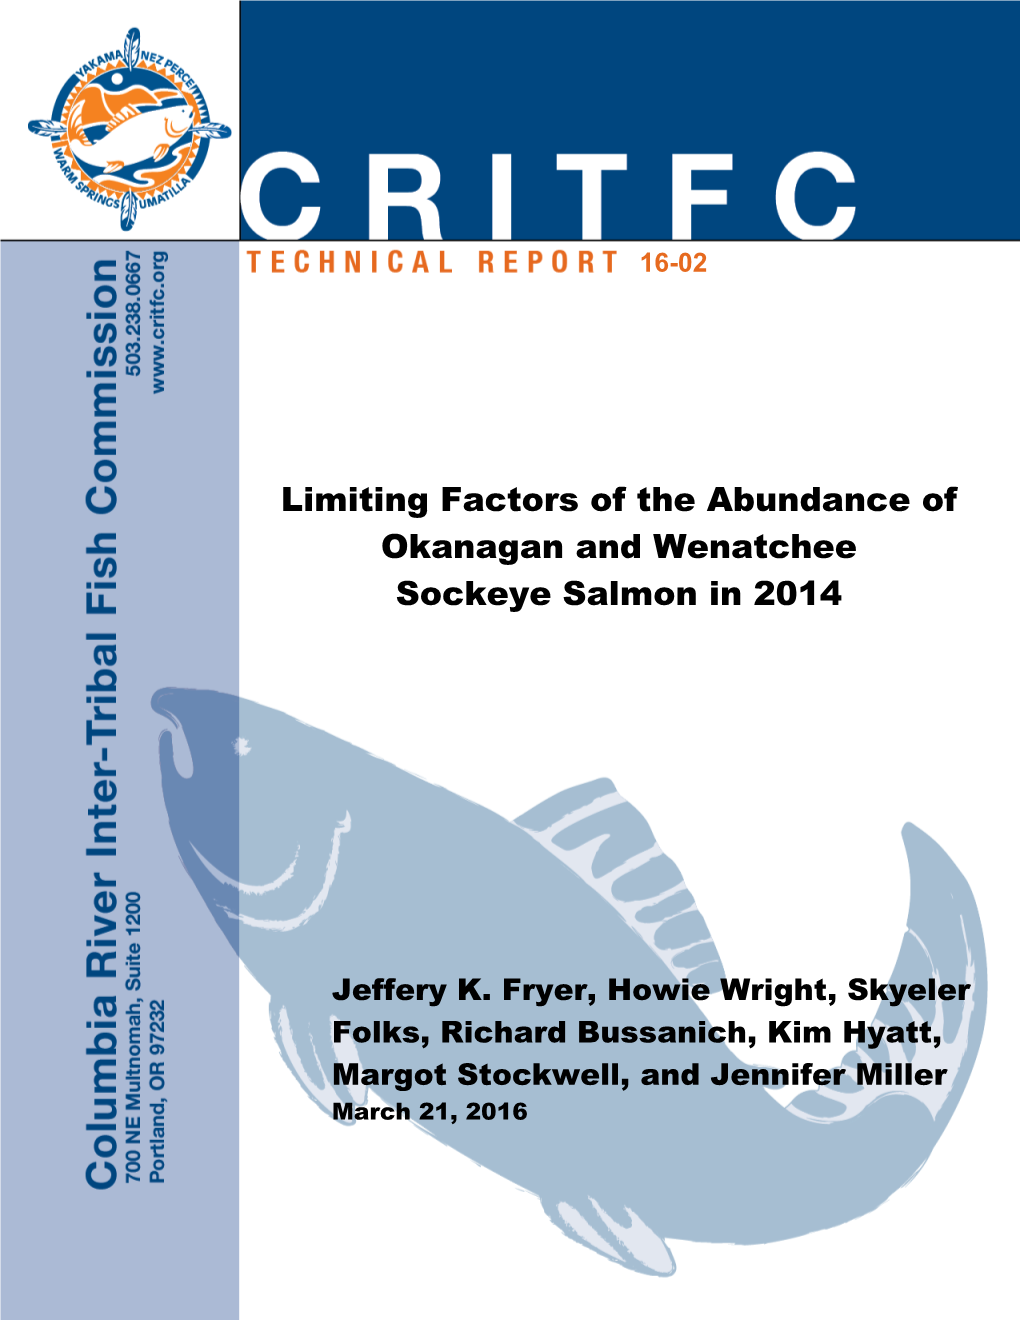 Limiting Factors of the Abundance of Okanagan and Wenatchee Sockeye Salmon in 2014